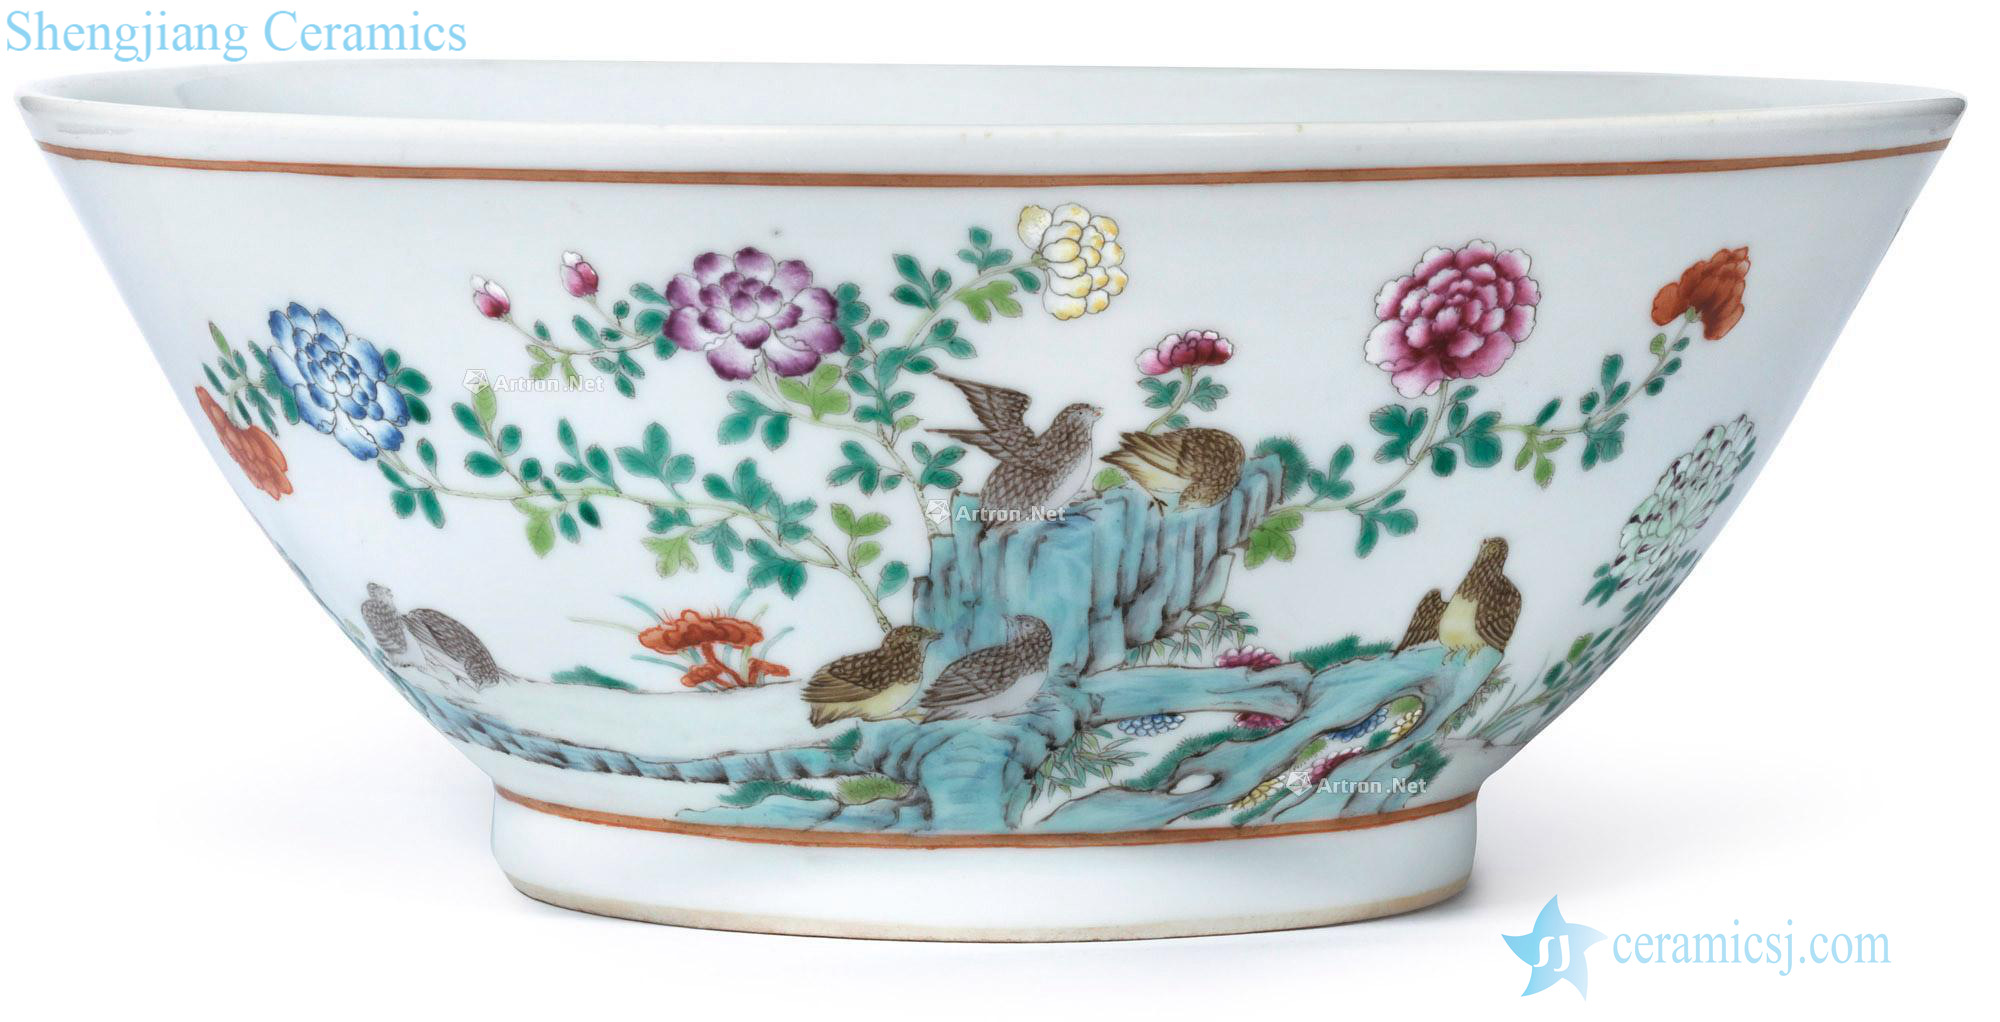 Pastel reign of qing emperor guangxu ix cohabiting figure large bowl